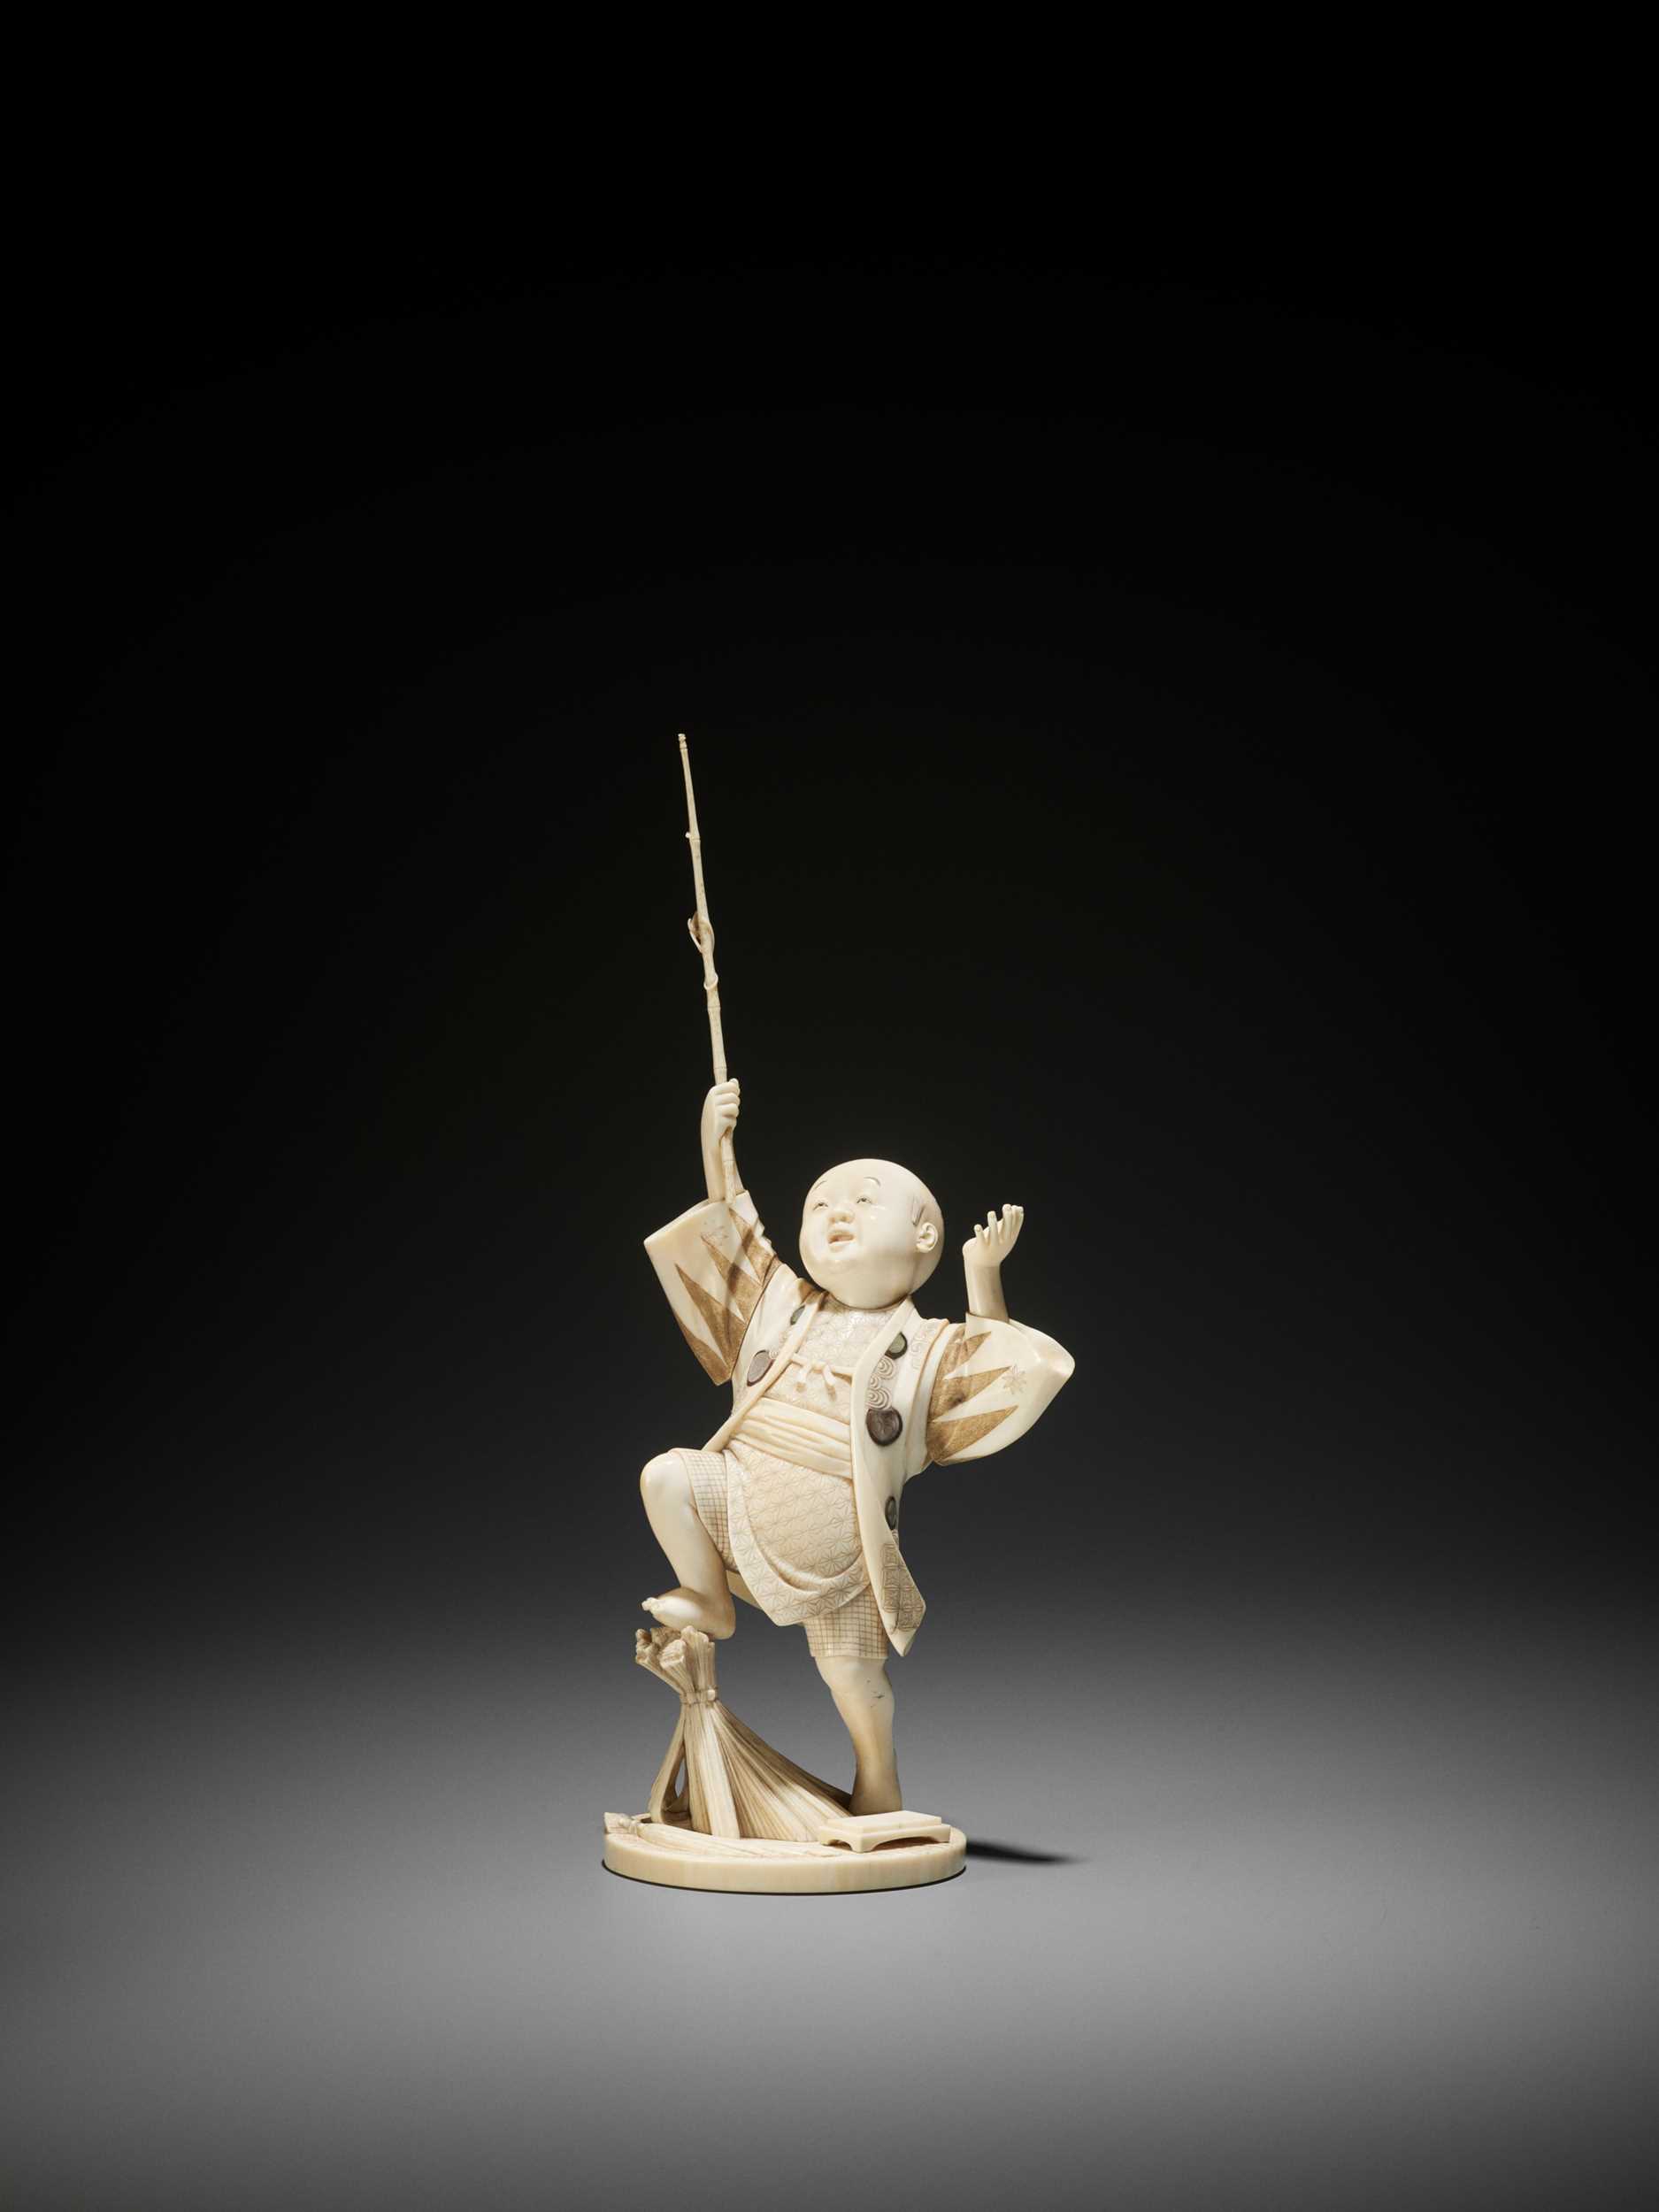 Lot 160 - GYOKUSUI: AN IVORY OKIMONO OF A BOY CATCHING A DRAGONFLY